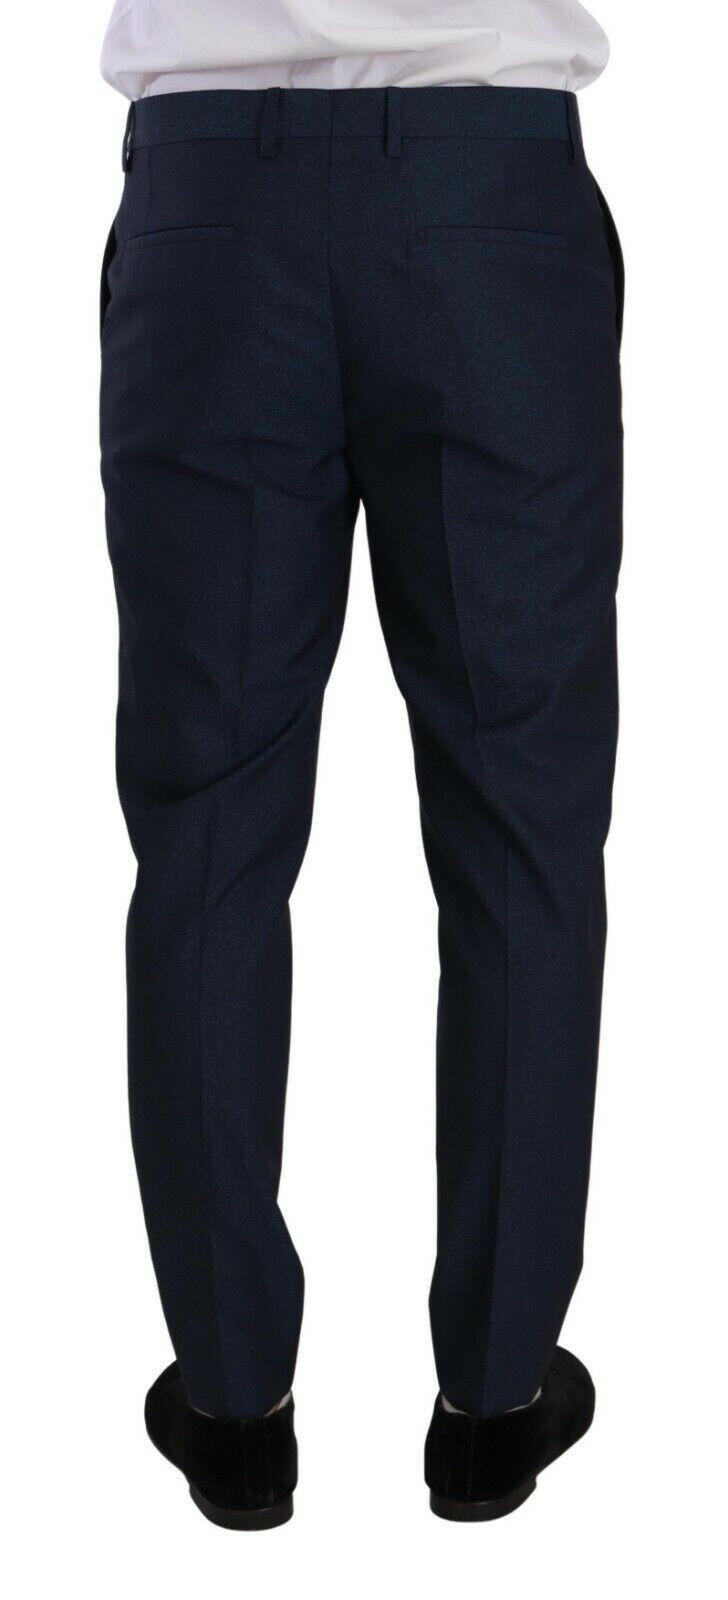 Dolce & Gabbana Dark Blue Formal Dress Trouser Dress Pants - GENUINE AUTHENTIC BRAND LLC  